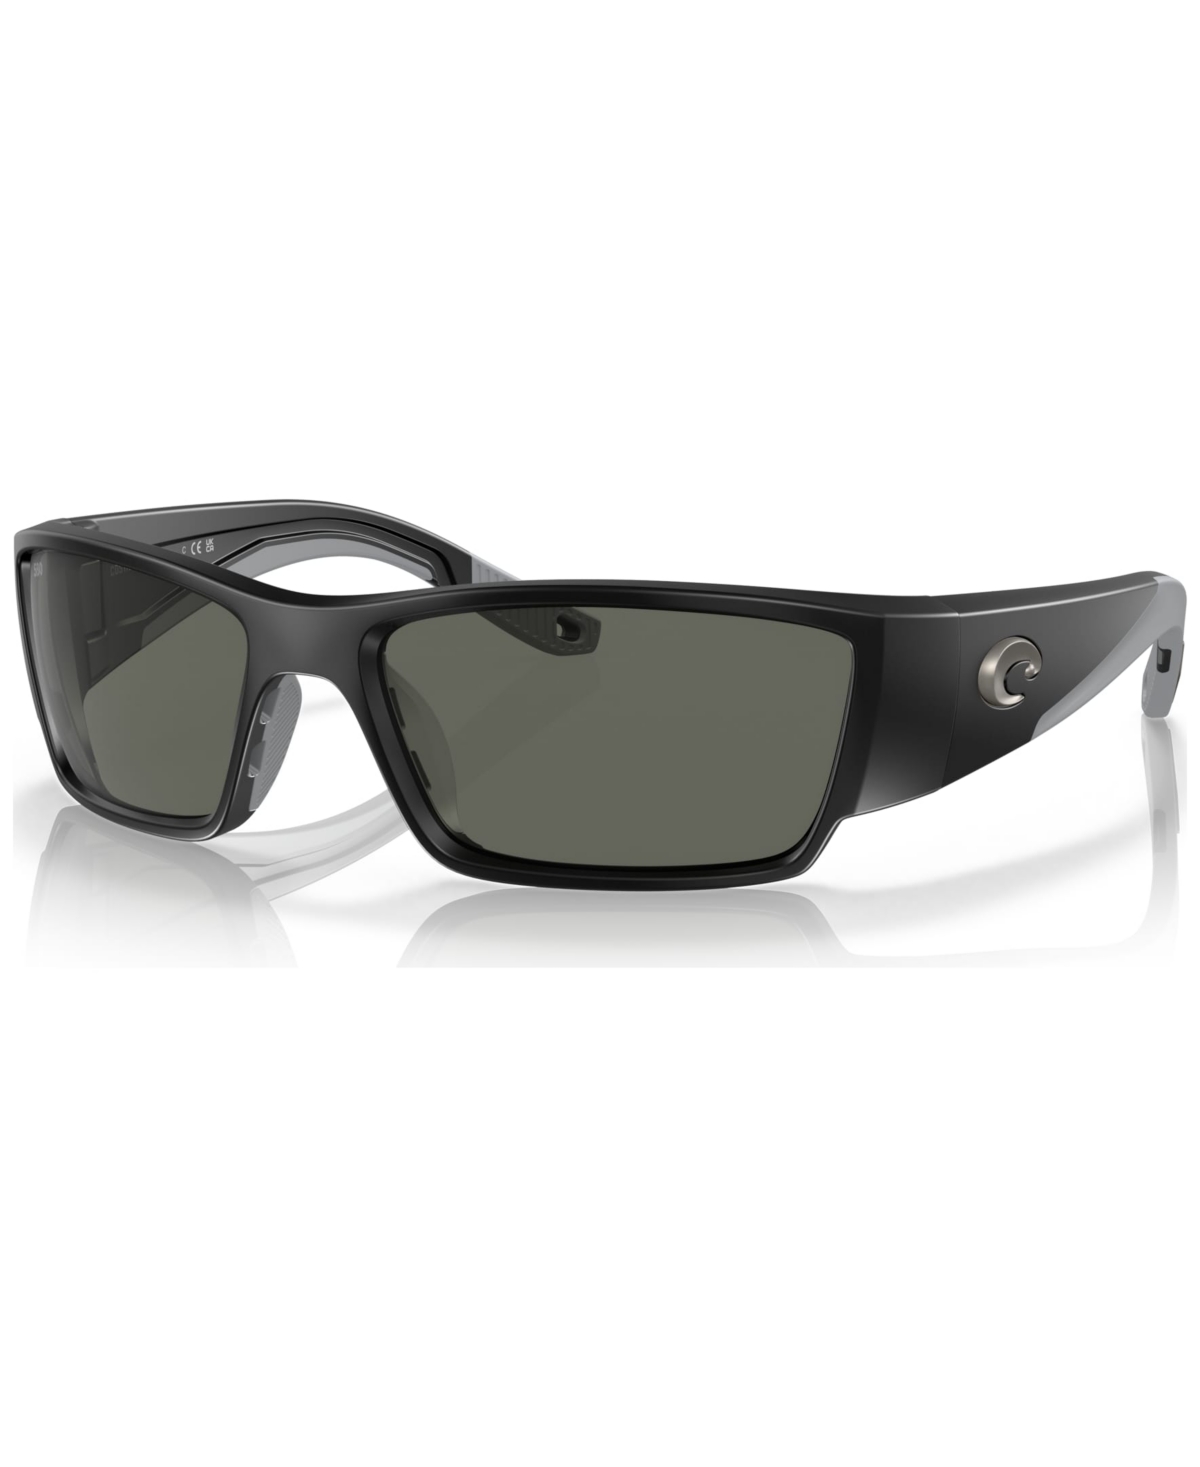 Men's Polarized Sunglasses, Corbina Pro - Matte Black